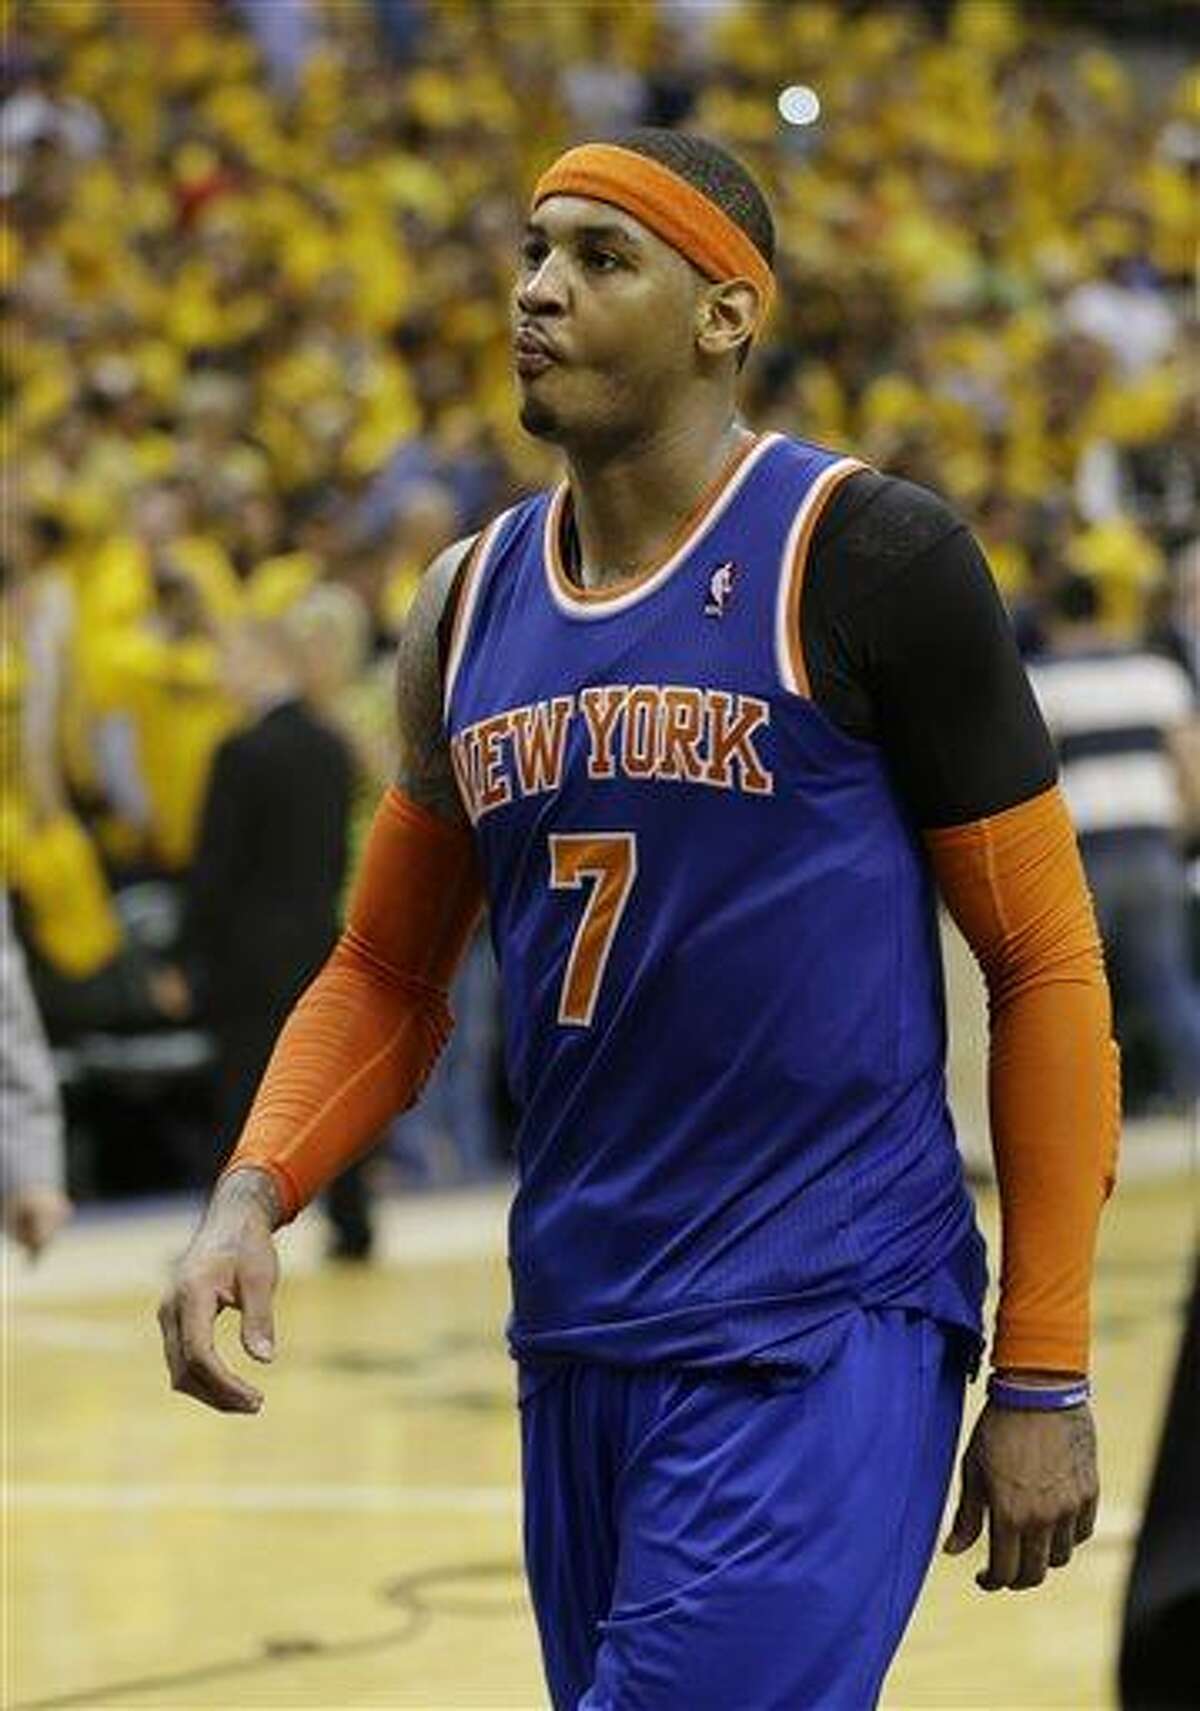 Where Do The New York Knicks Play?